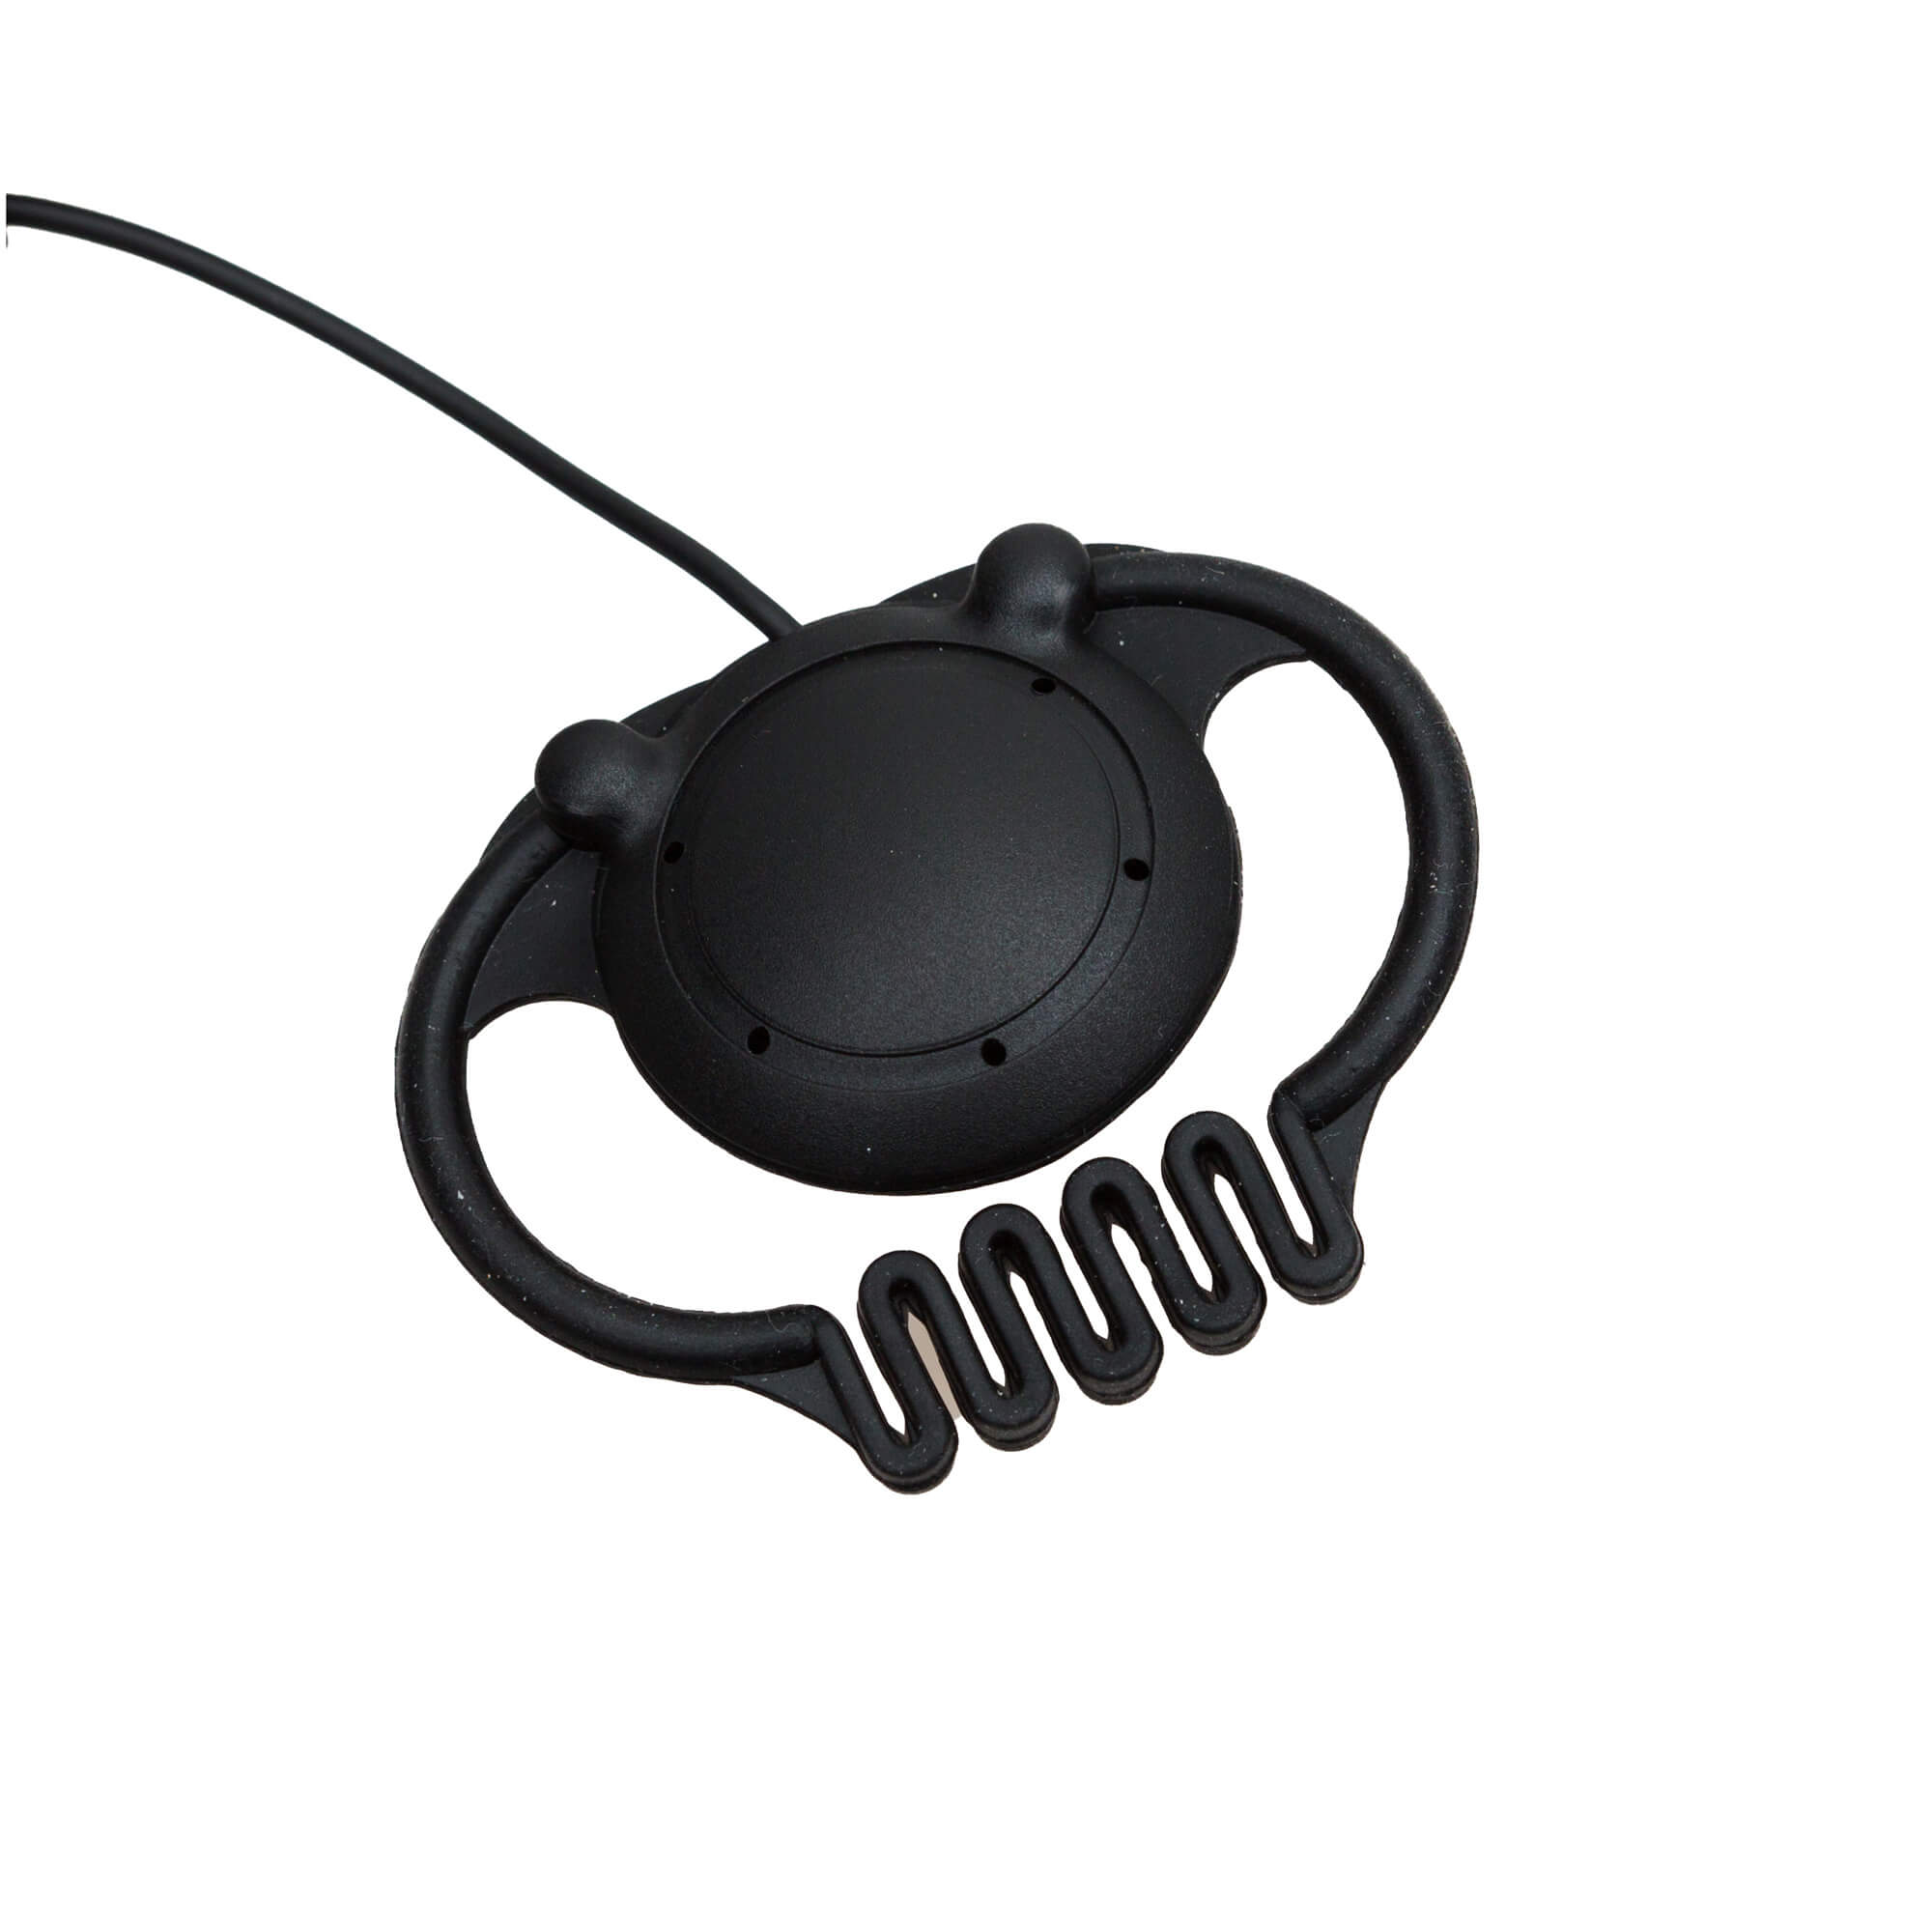 Axiwi EA-002 earphone with flexible earpiece - D2N